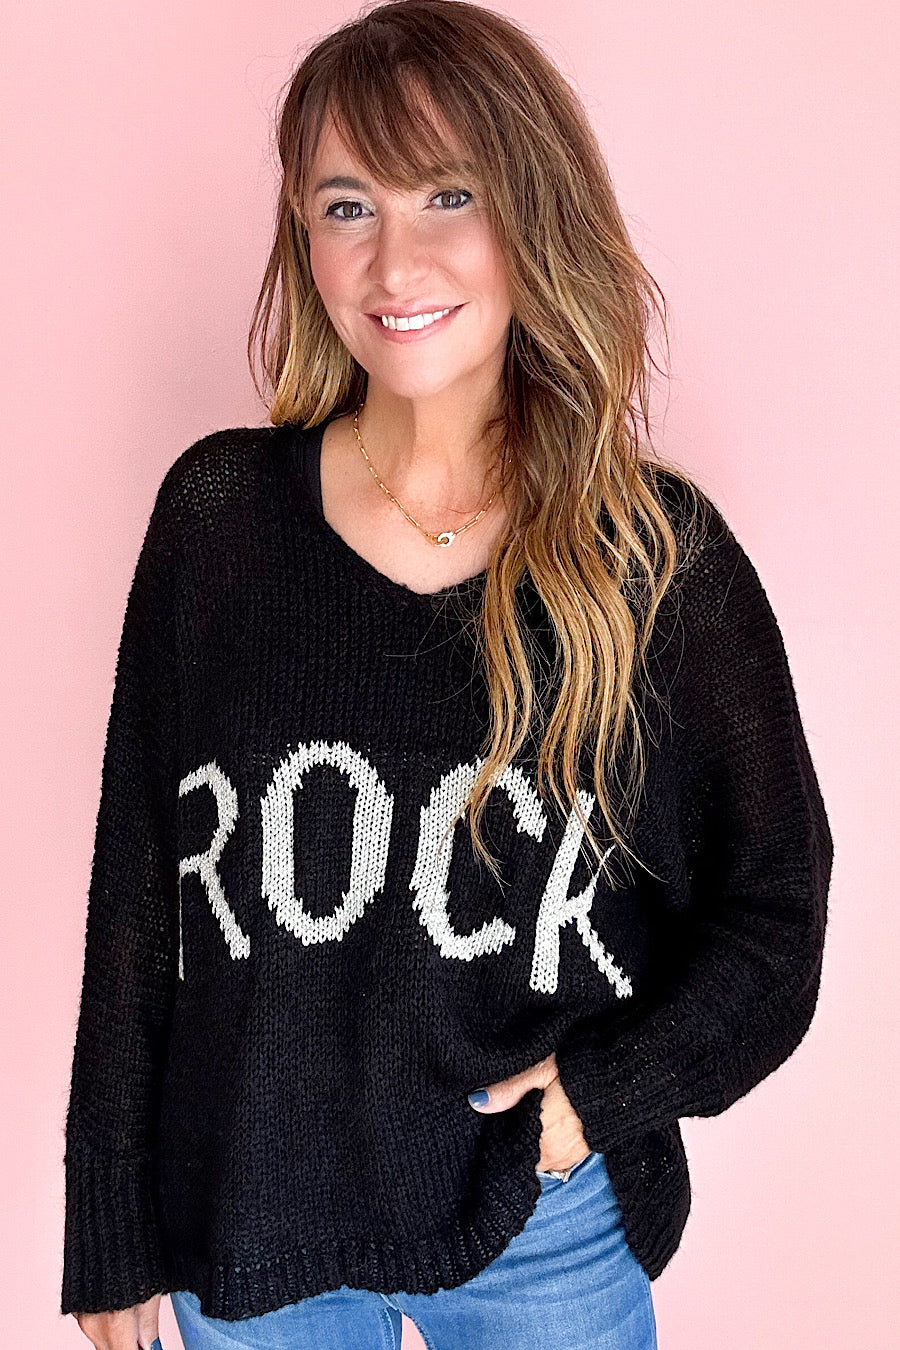 ROCK V-Neck Sweater